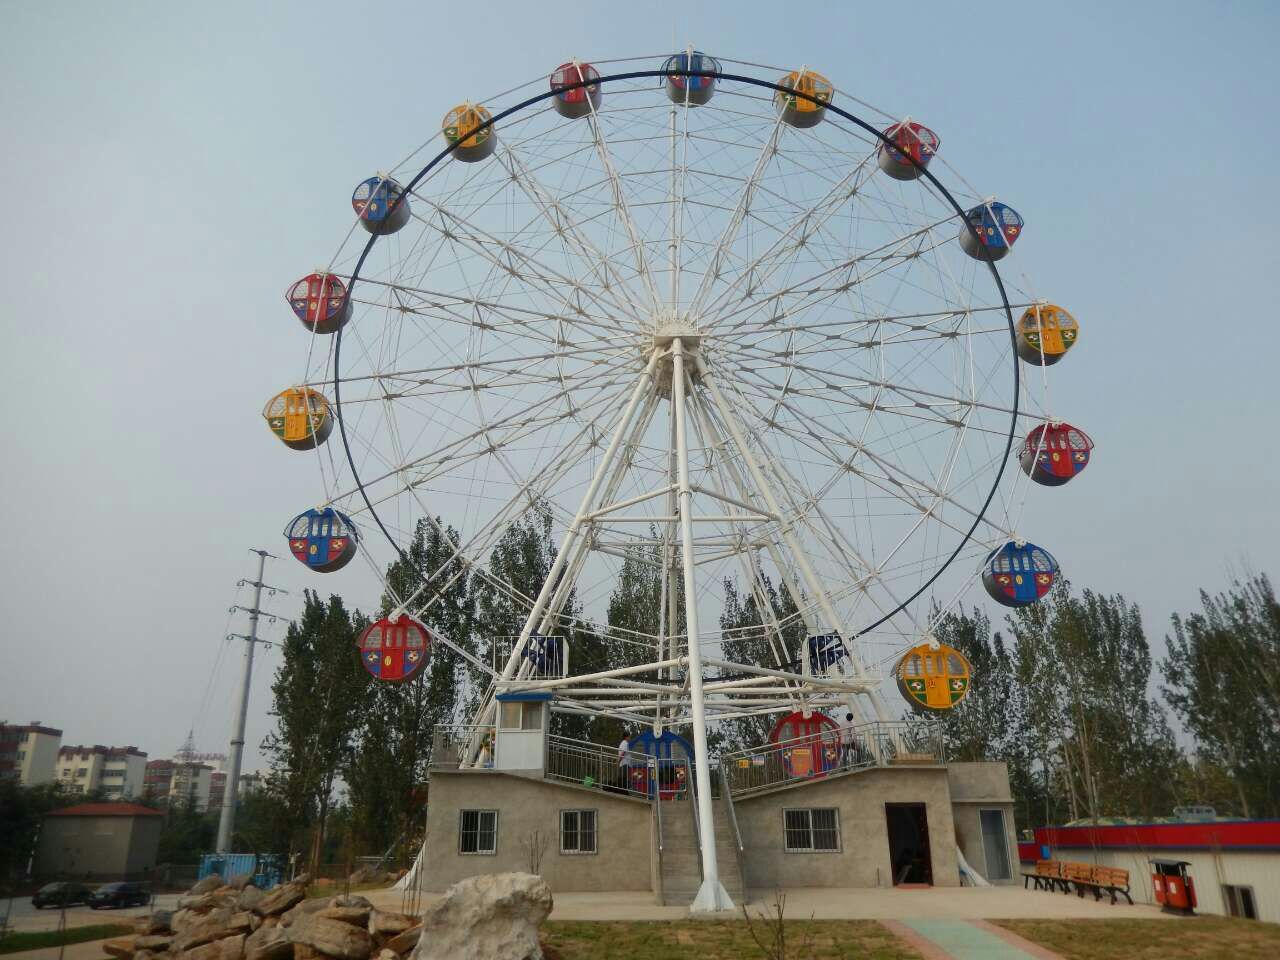 Ferris Wheel-Ferris wheel